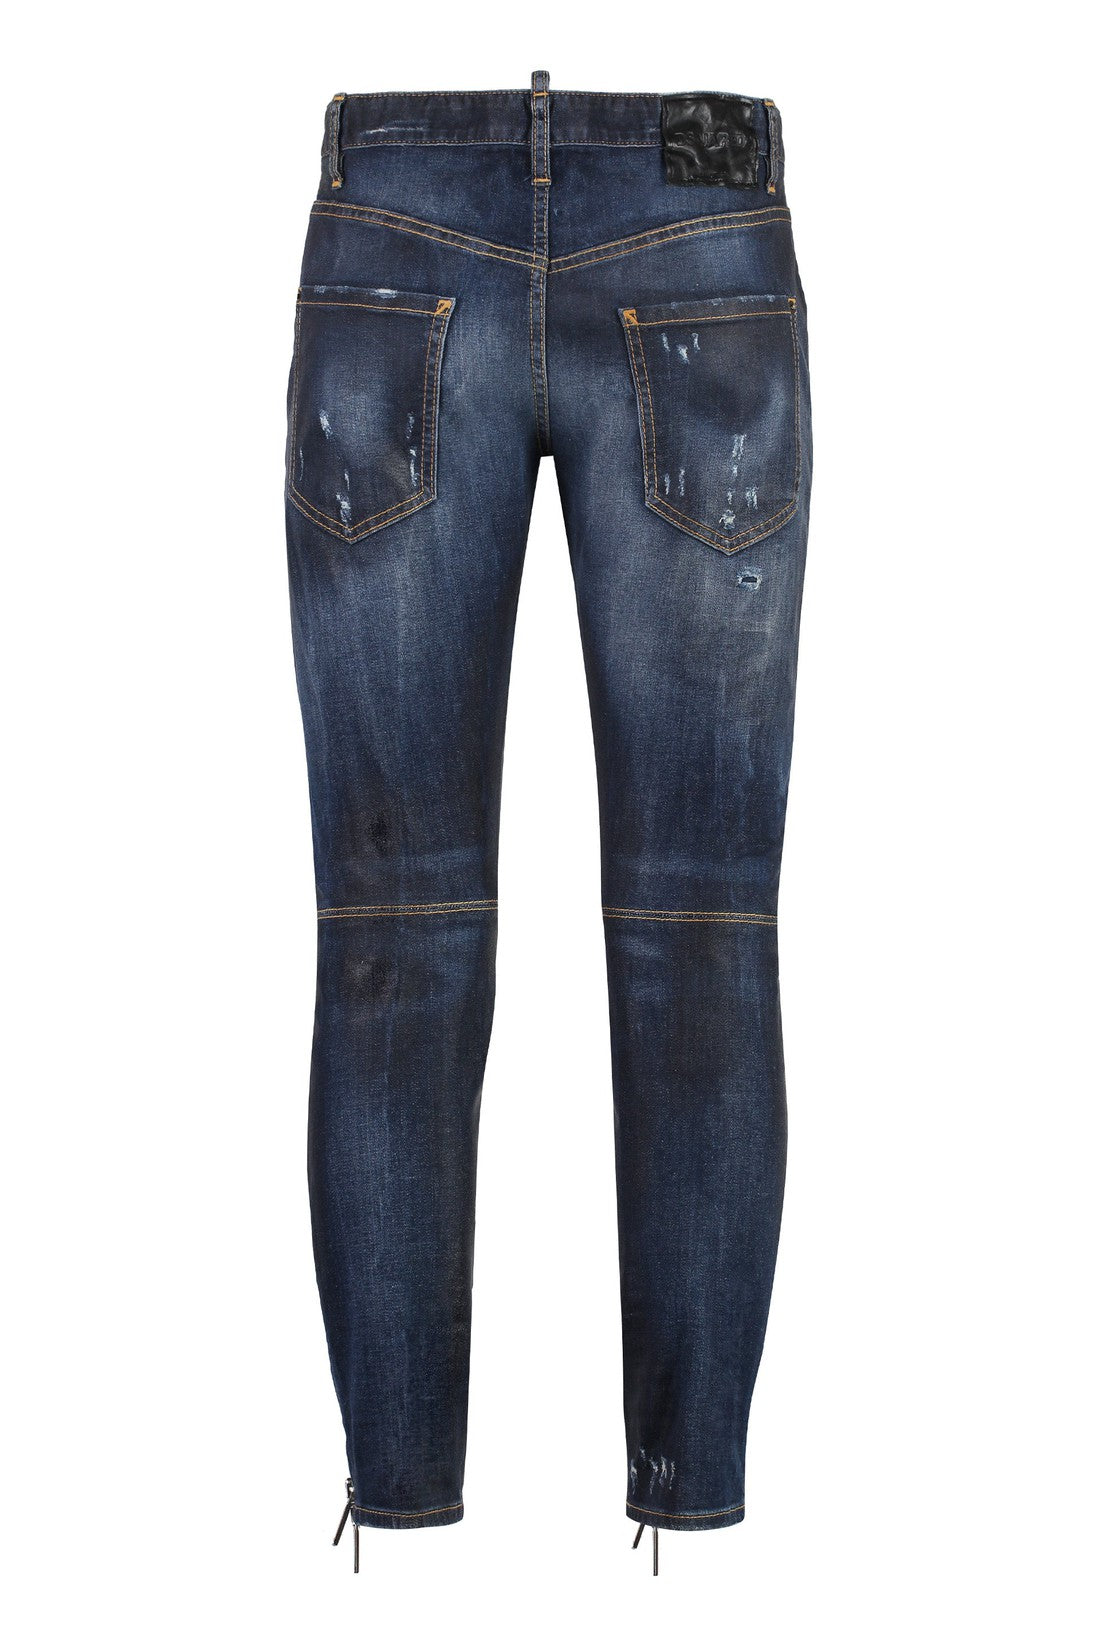 Dsquared2-OUTLET-SALE-Military Straight leg jeans-ARCHIVIST